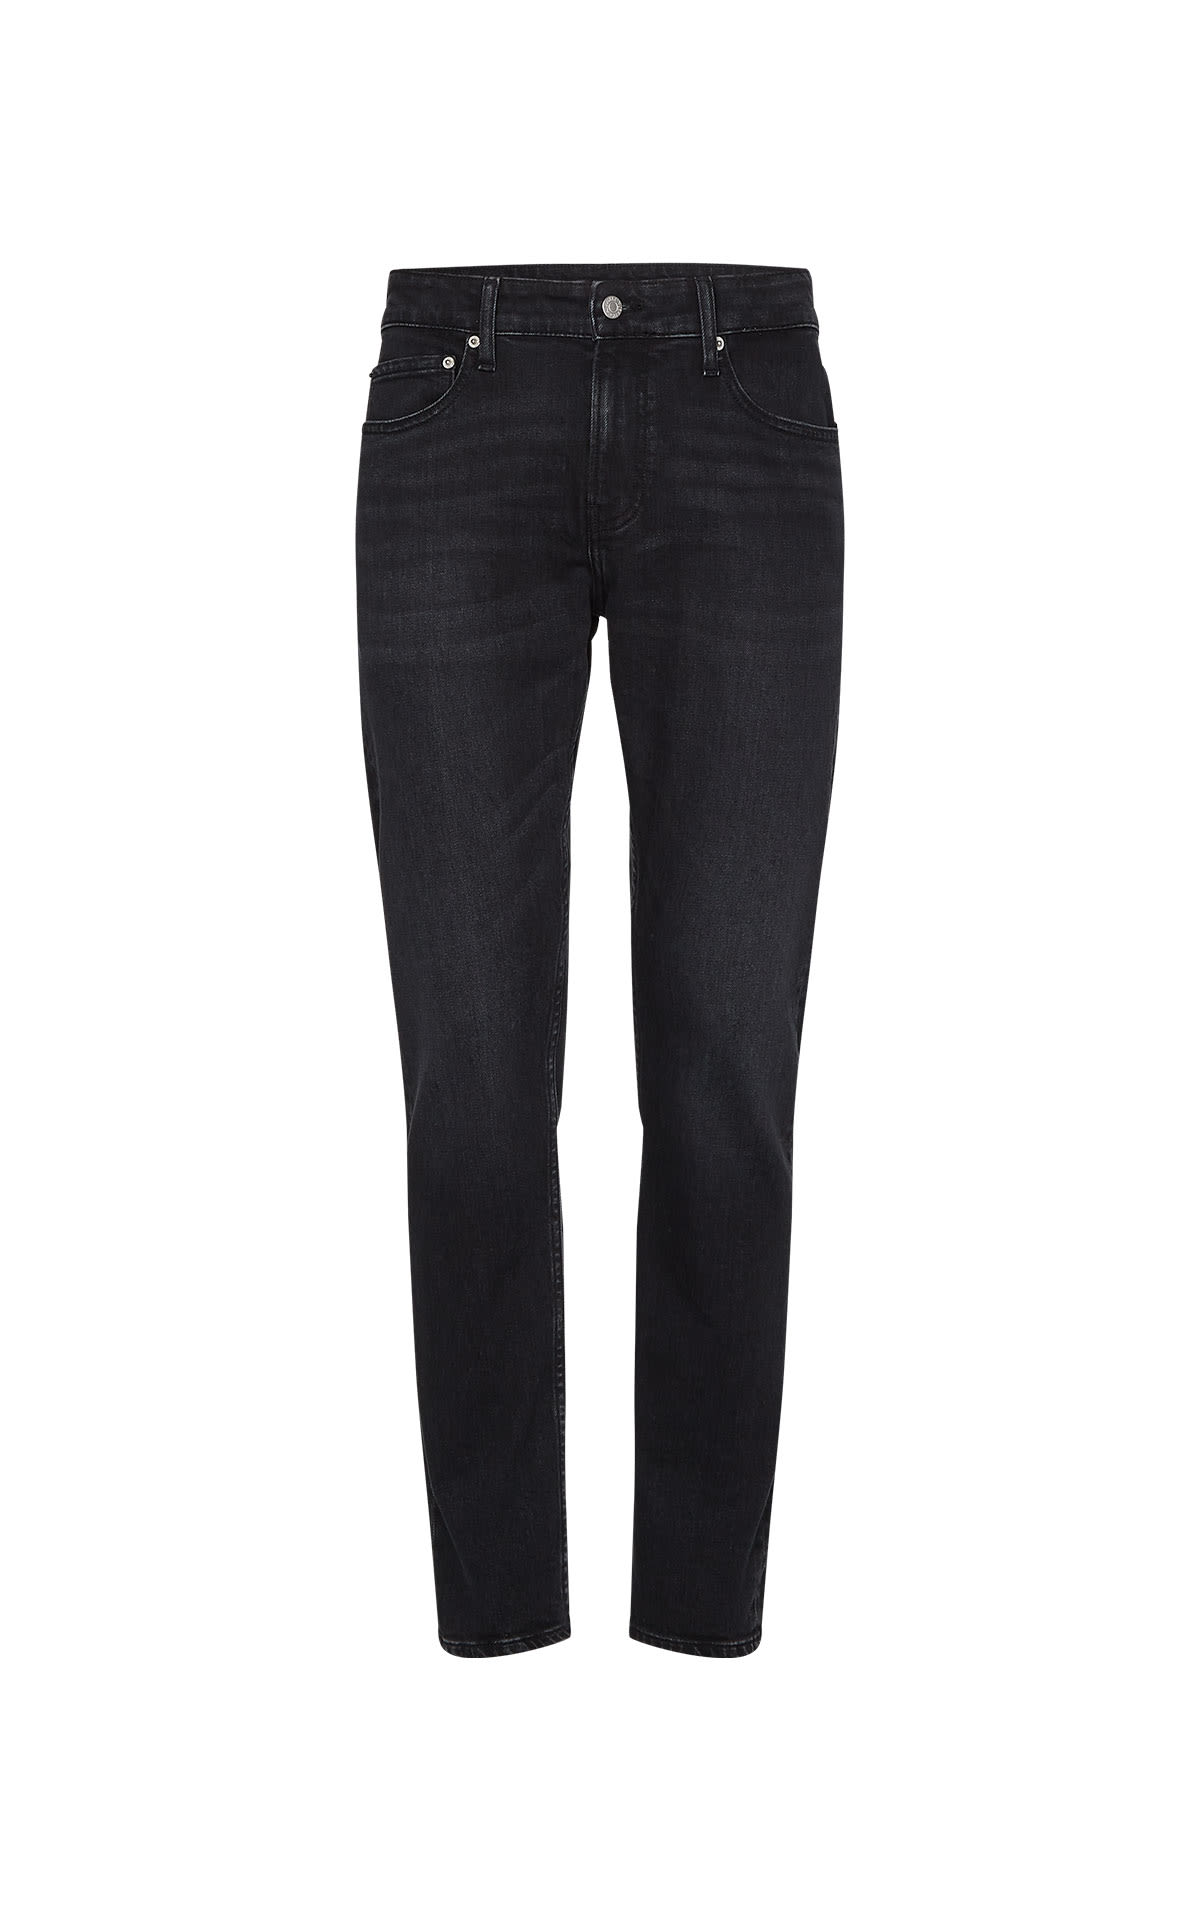 Calvin Klein Jeans black jeans